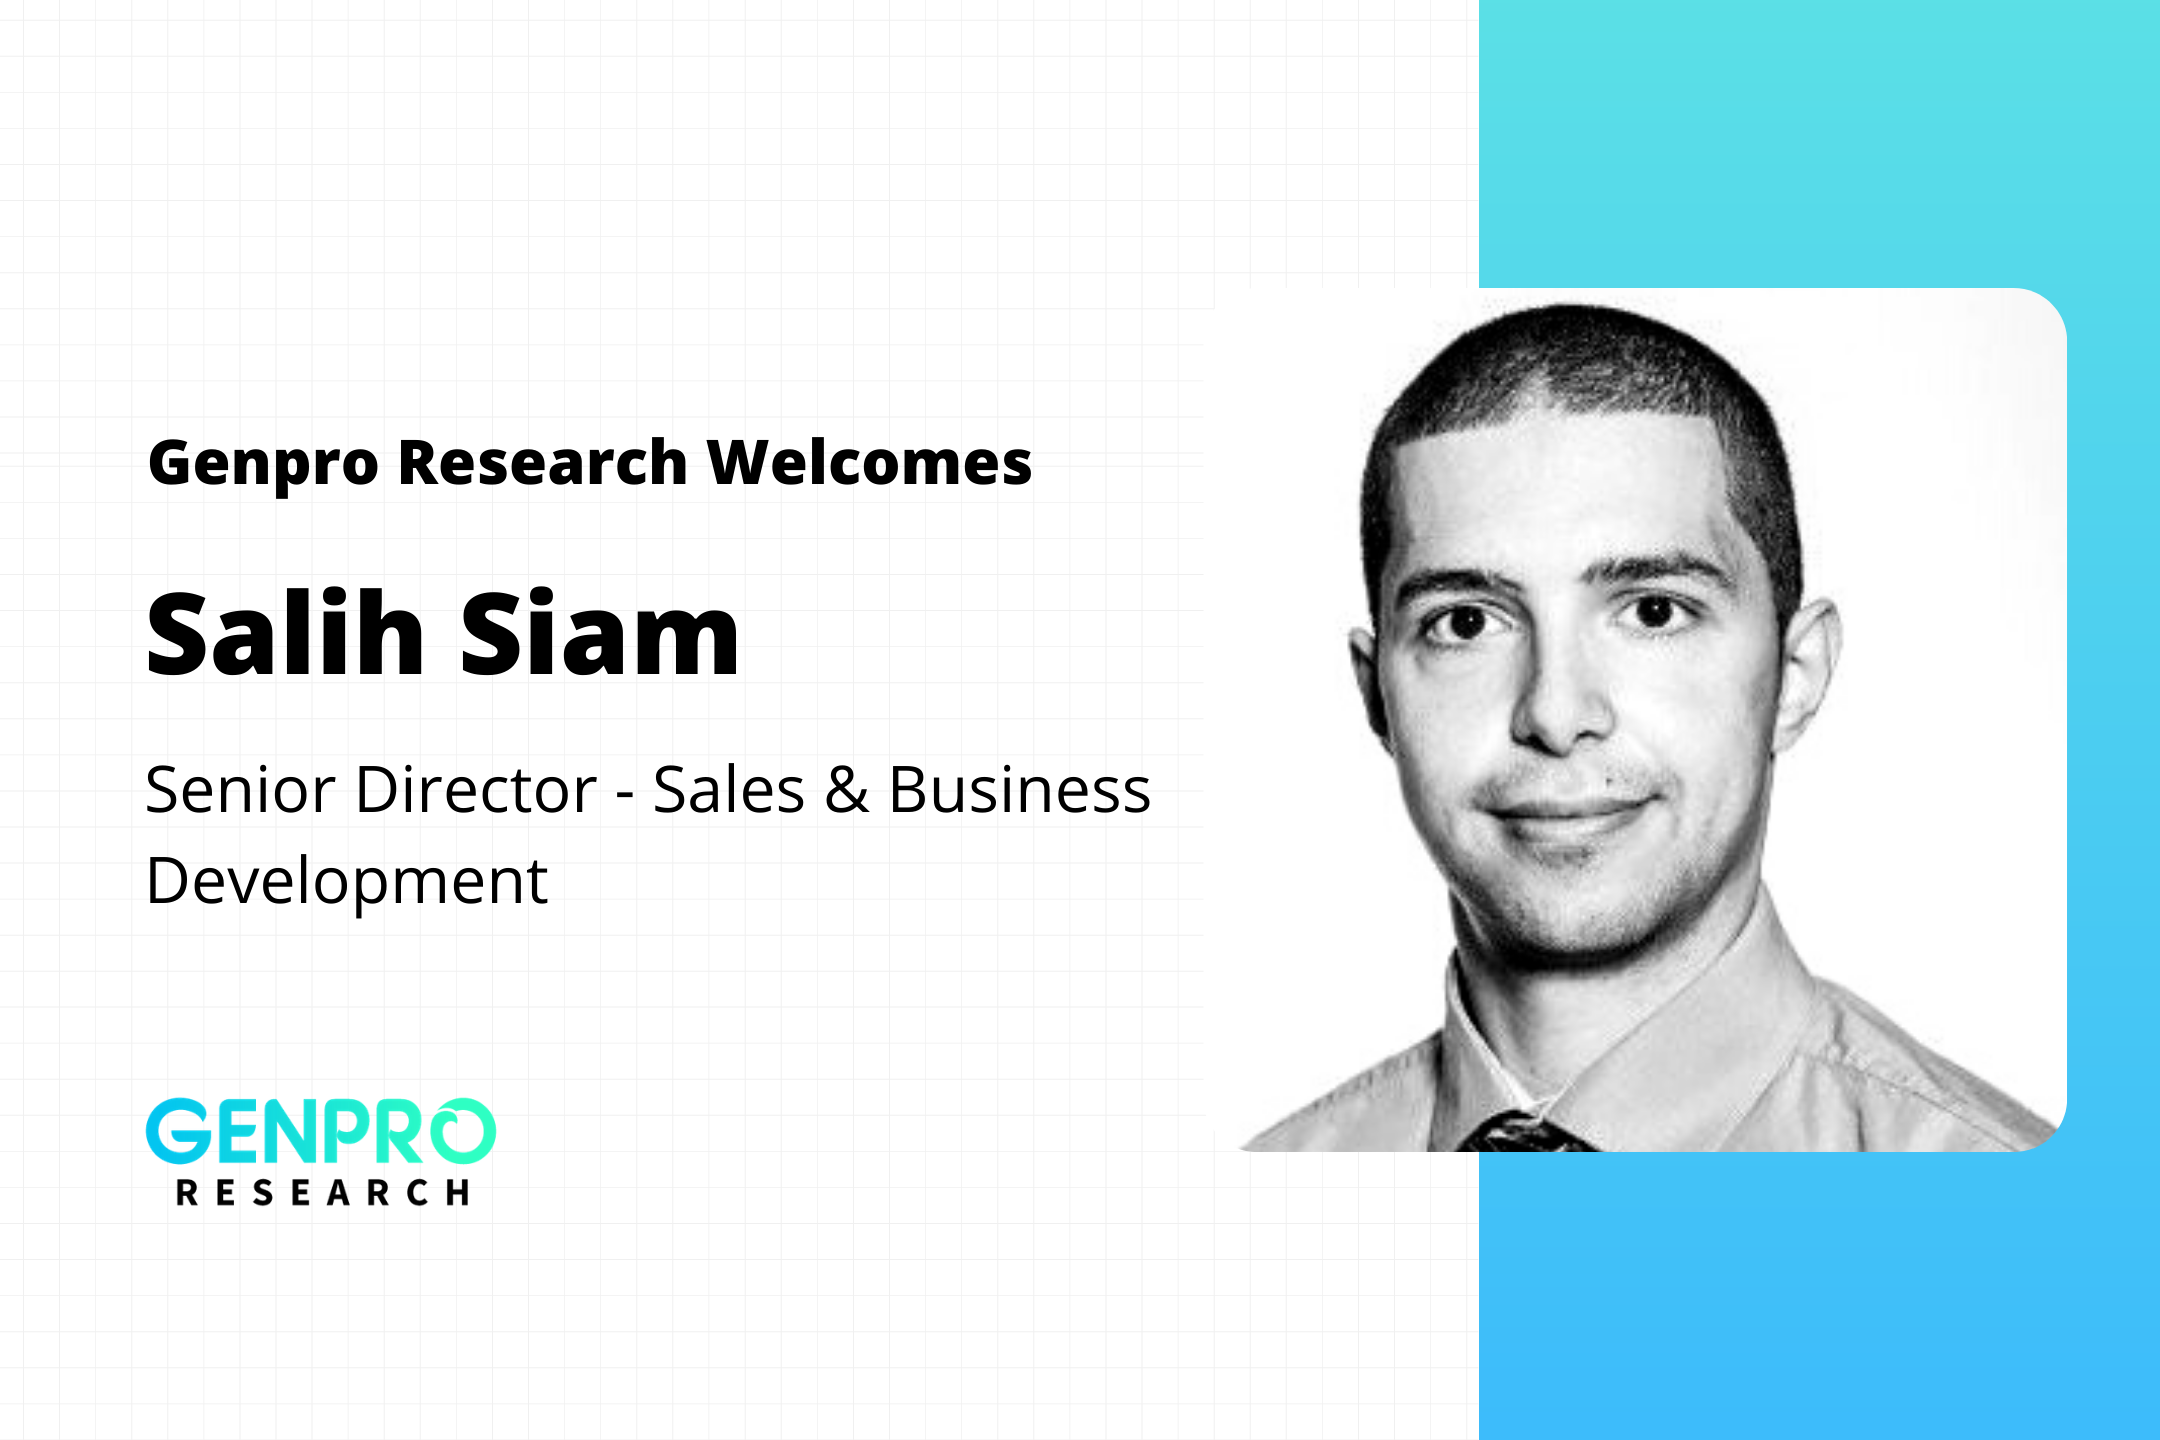 Genpro Research names Salih Siam as Senior Director, Sales & Business Development